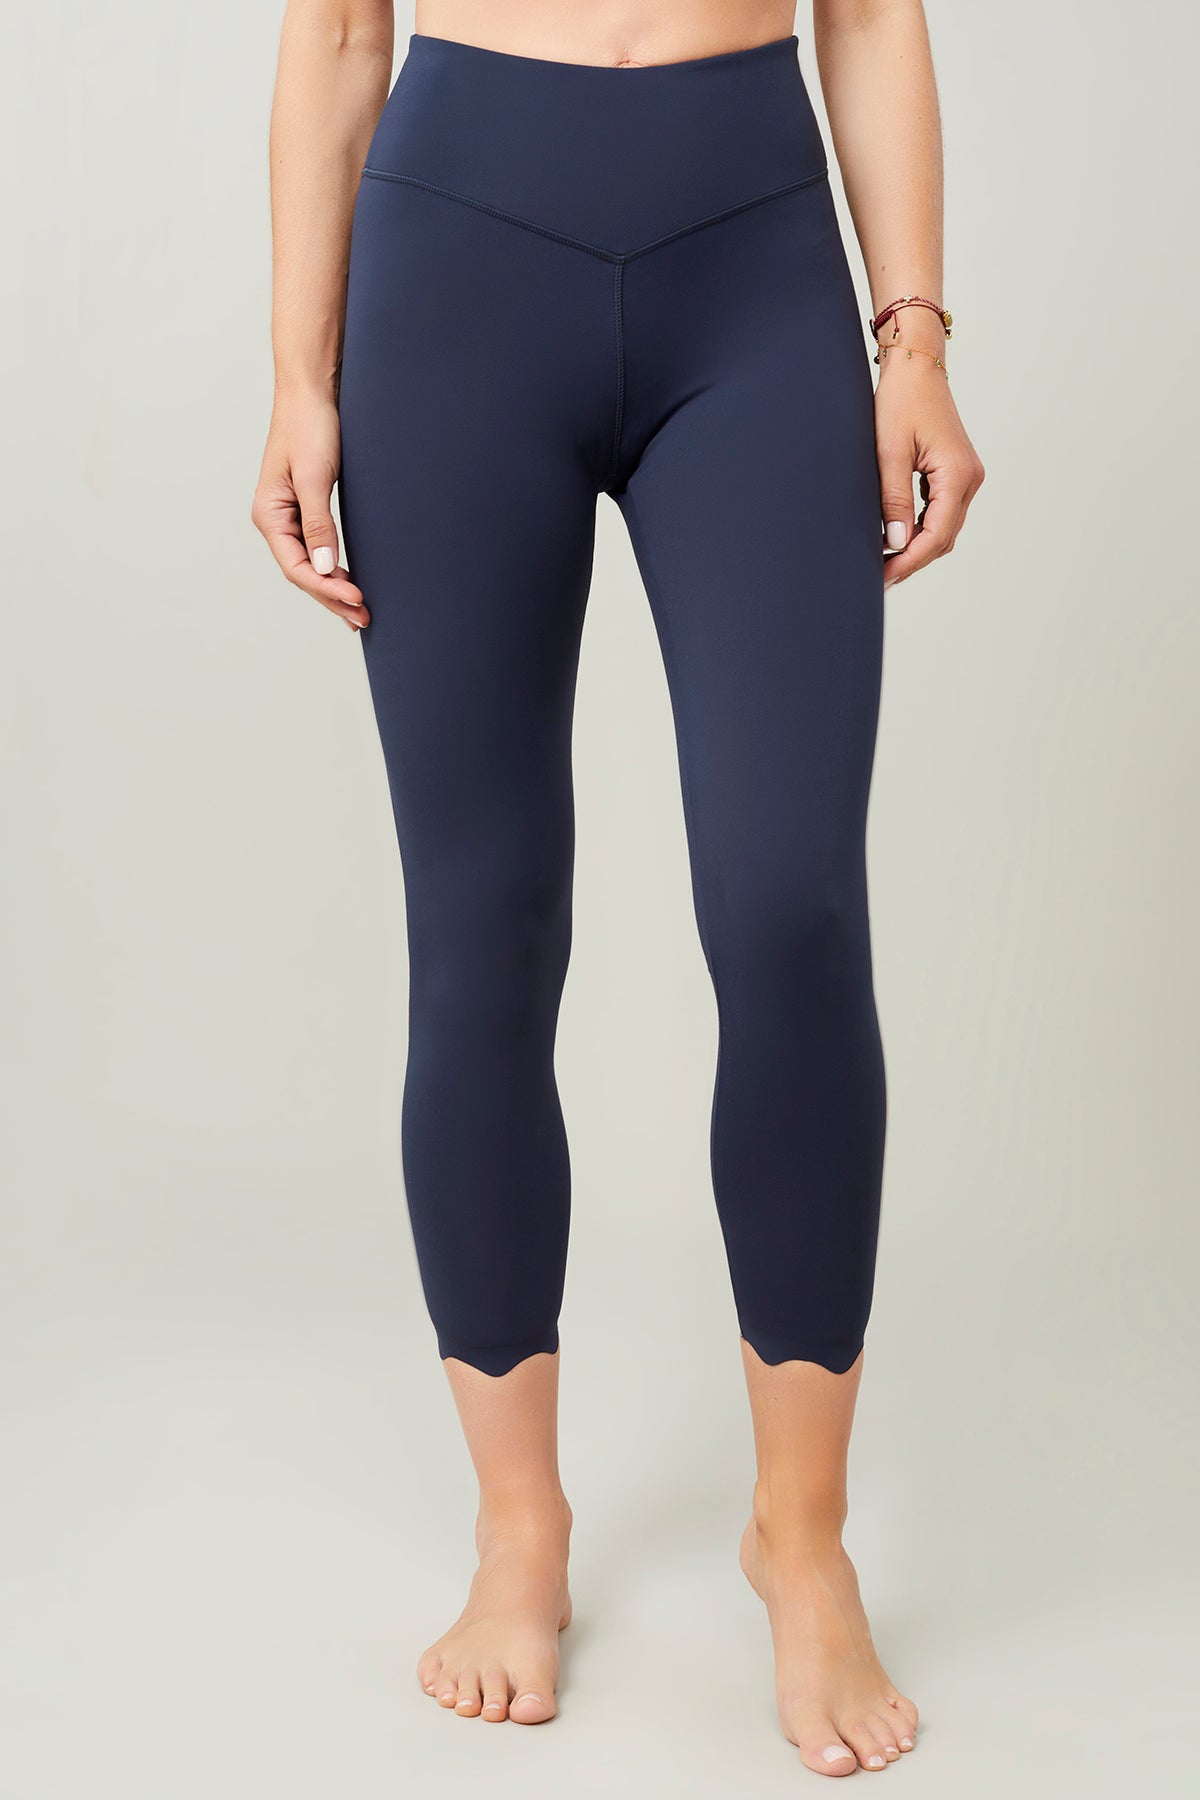 MANDALA Yoga Pants - sustainable & functional Yoga trousers